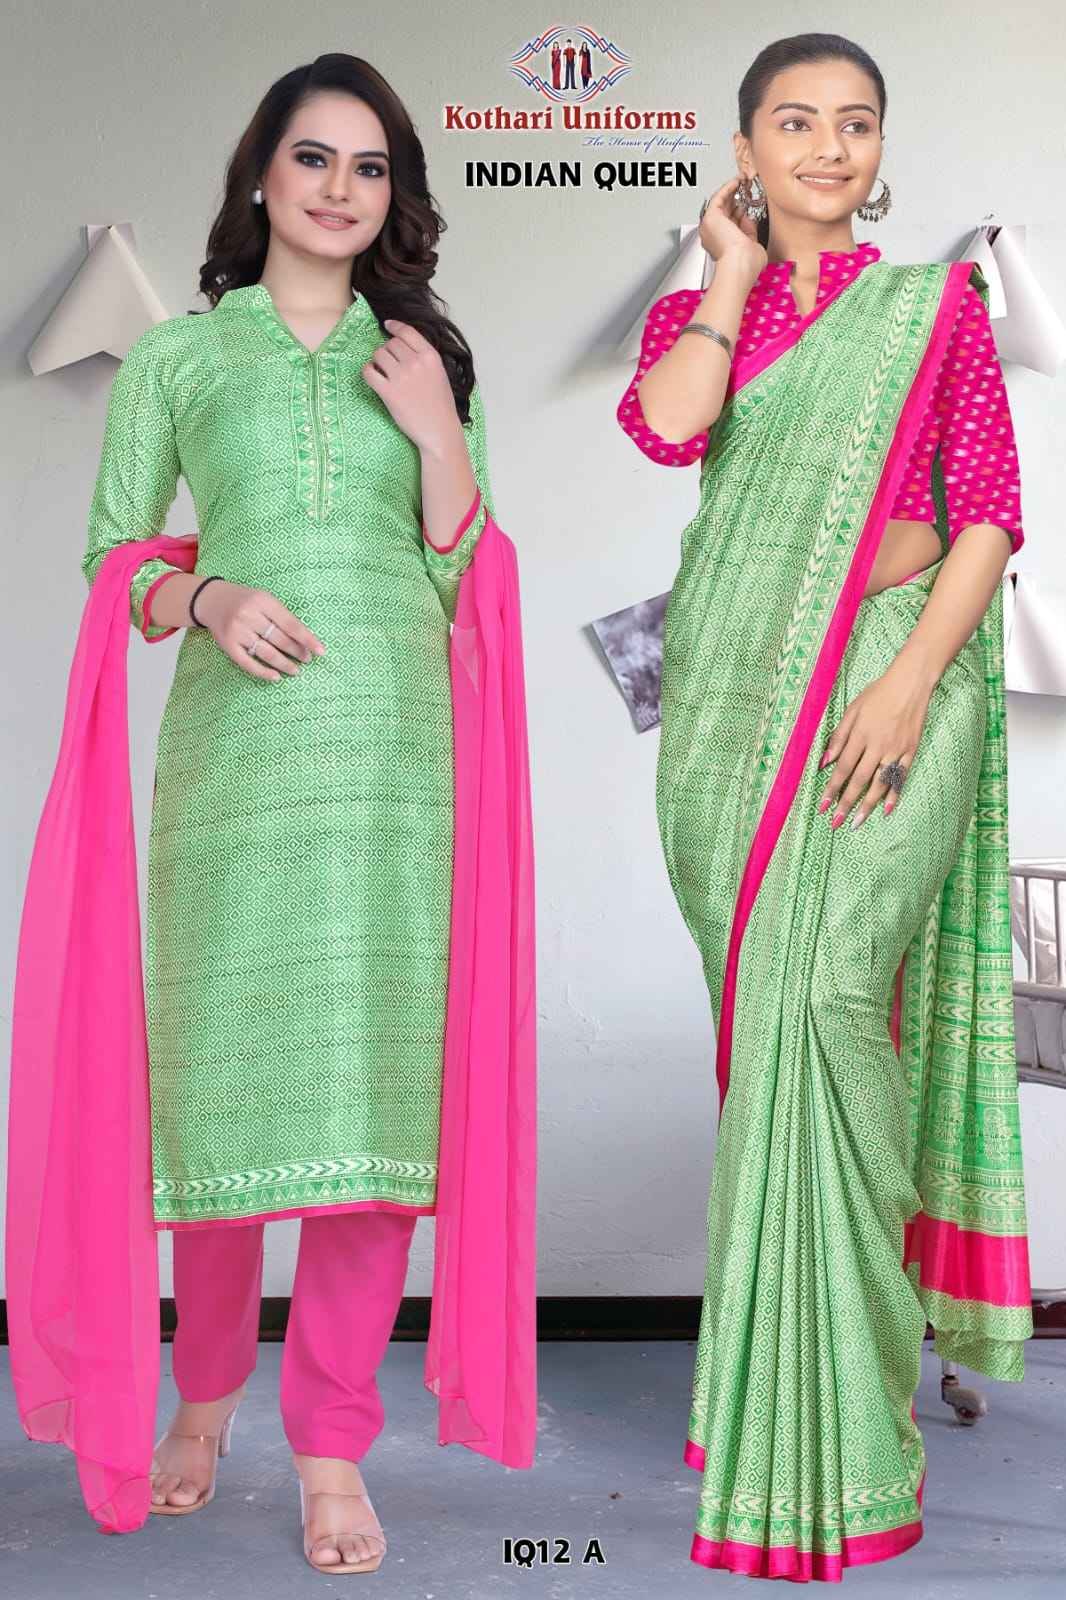  Green and Pink Indian Queen - IQ12 A & CIQ12A Women's Premium  Non Crepe Fine Print  Uniform Saree Salwar Combo For Office Staff